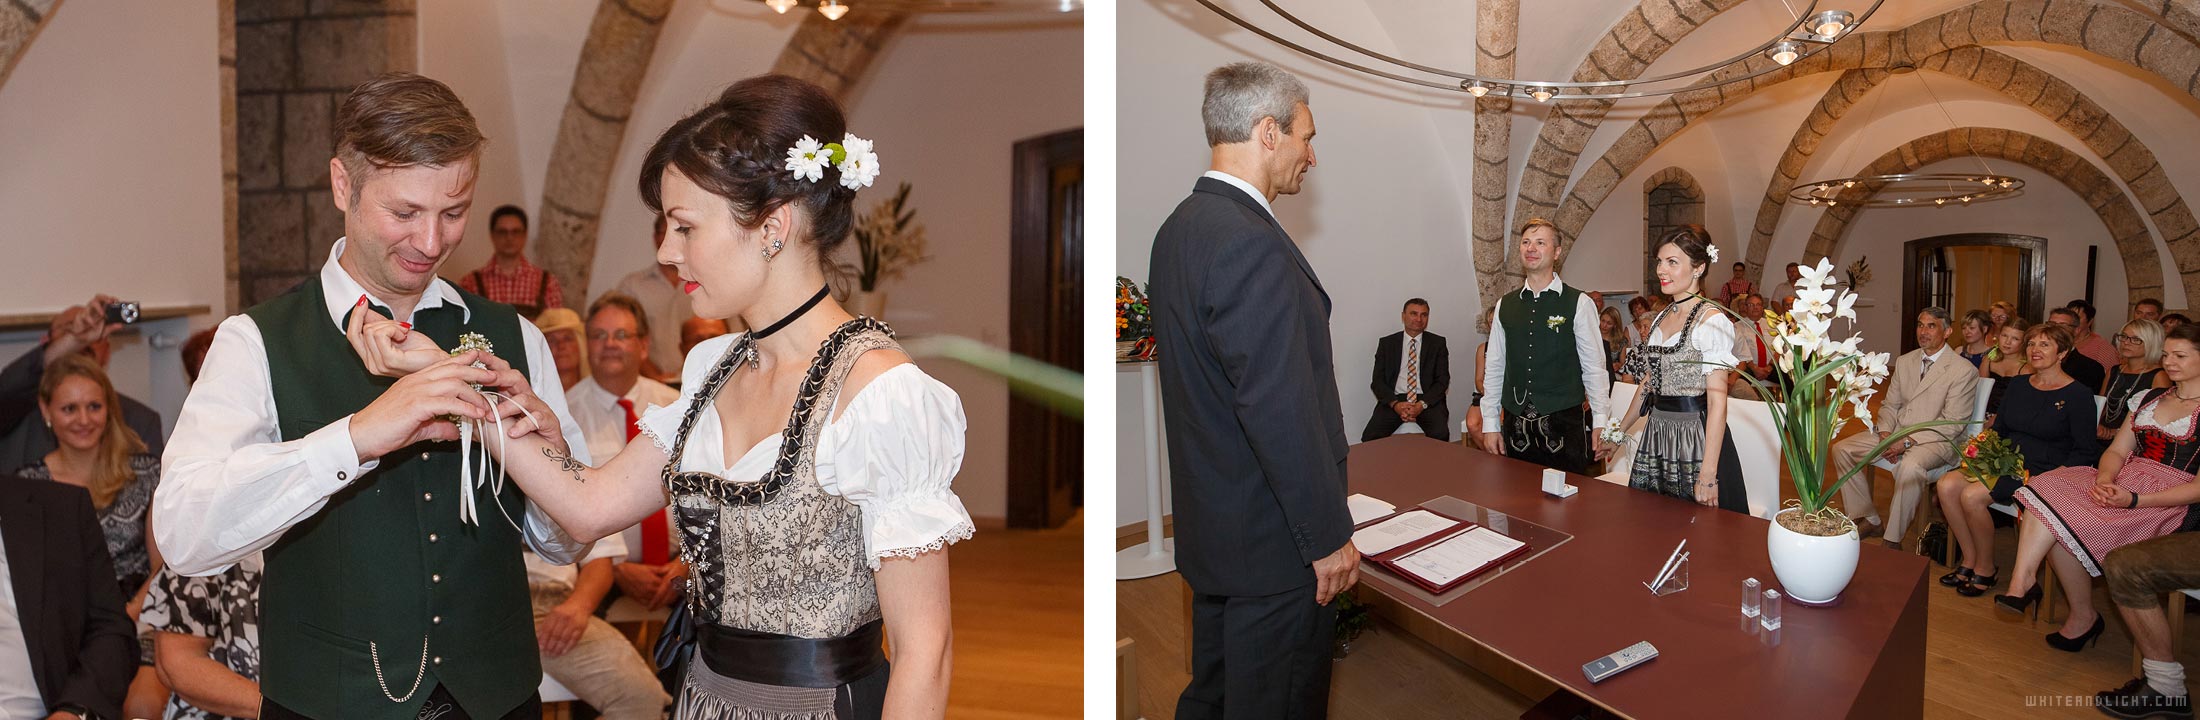 Bavarian wedding dress